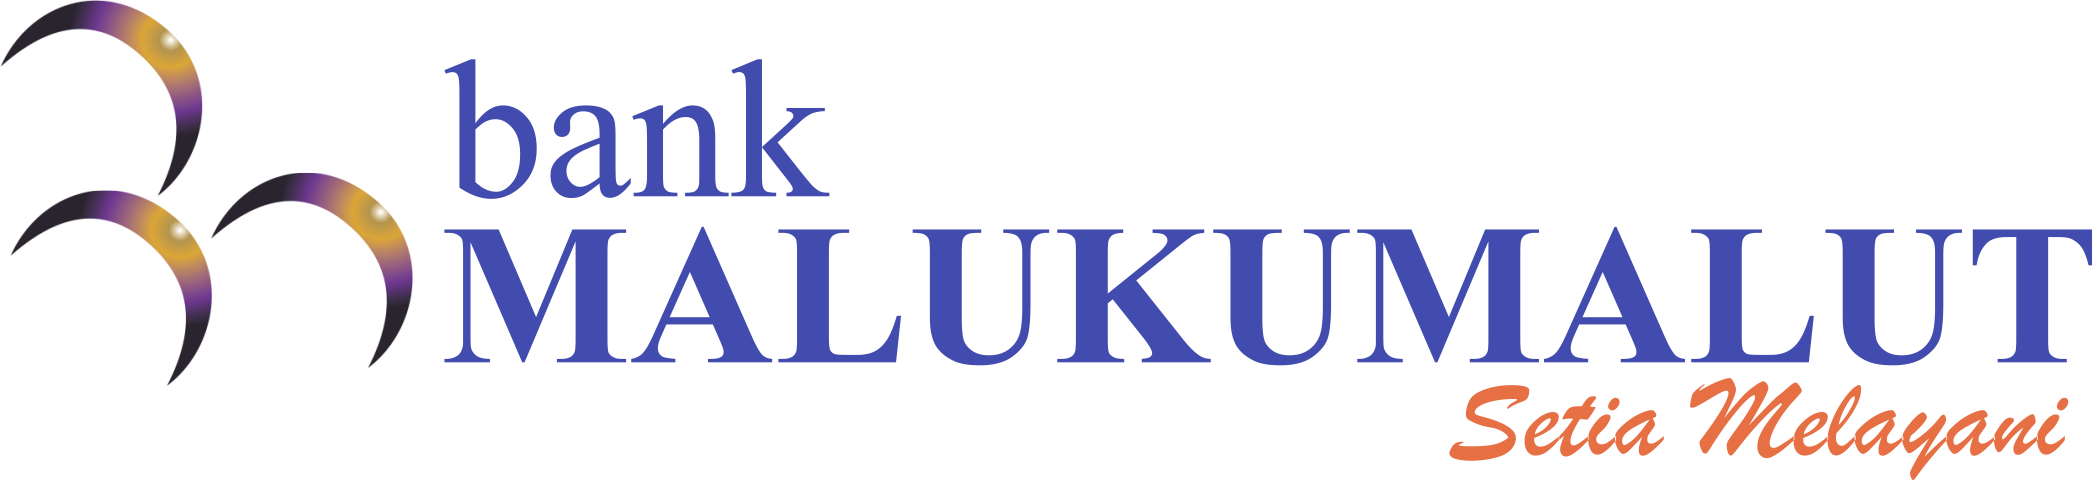 Bank-Malukumalut-Logo-PNG-480p-FileVector69